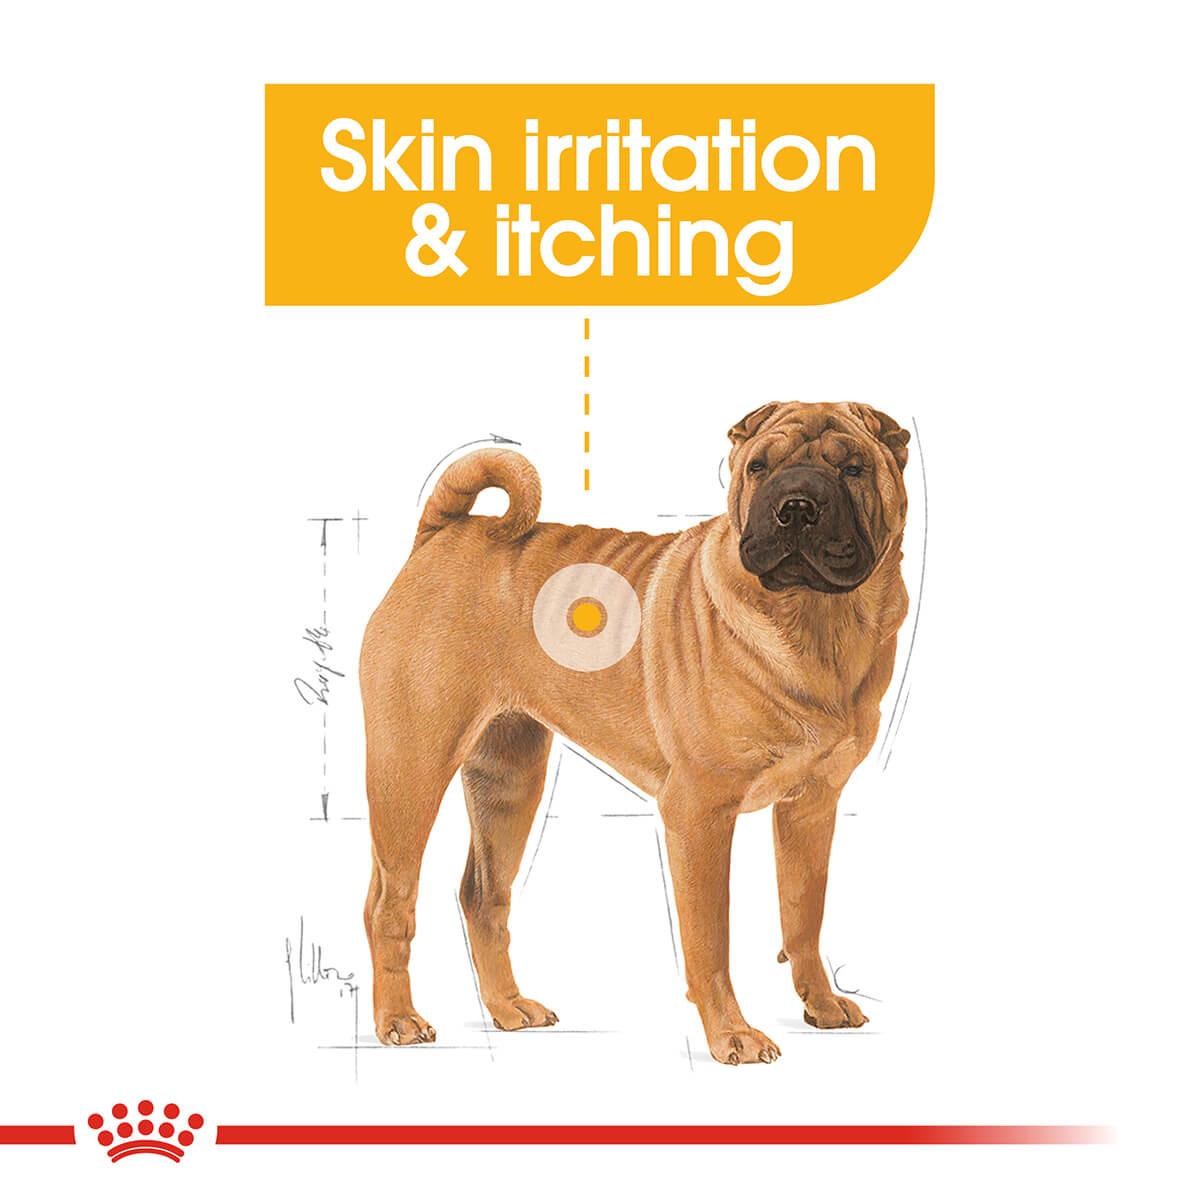 Royal Canin Dermacomfort Medium Adult Dry Dog Food